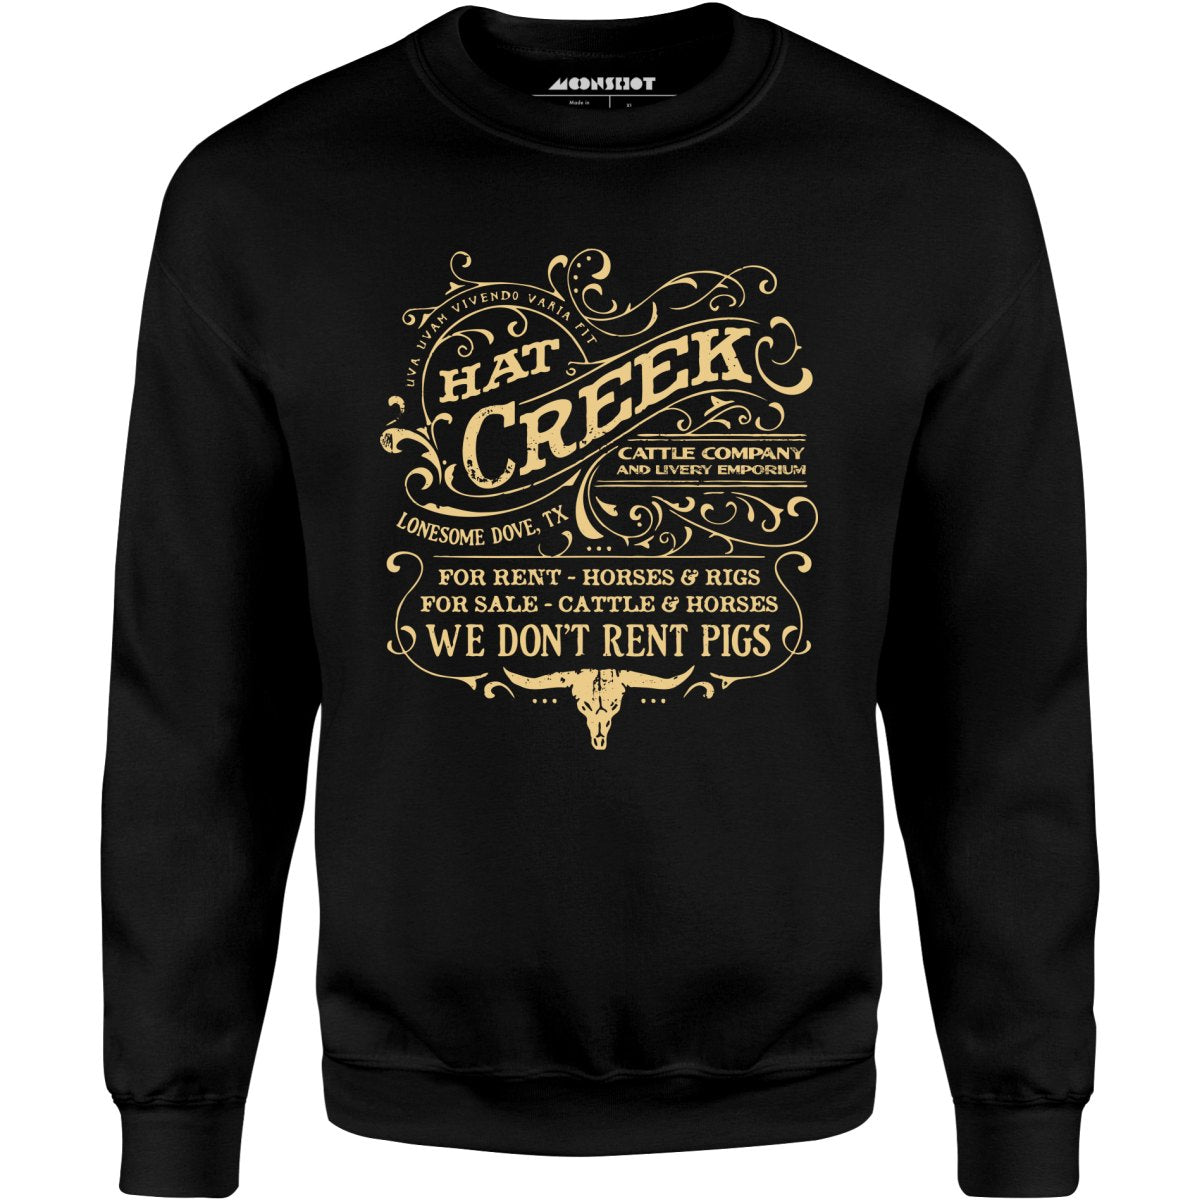 Hat Creek Cattle Company - Lonesome Dove, TX - Unisex Sweatshirt